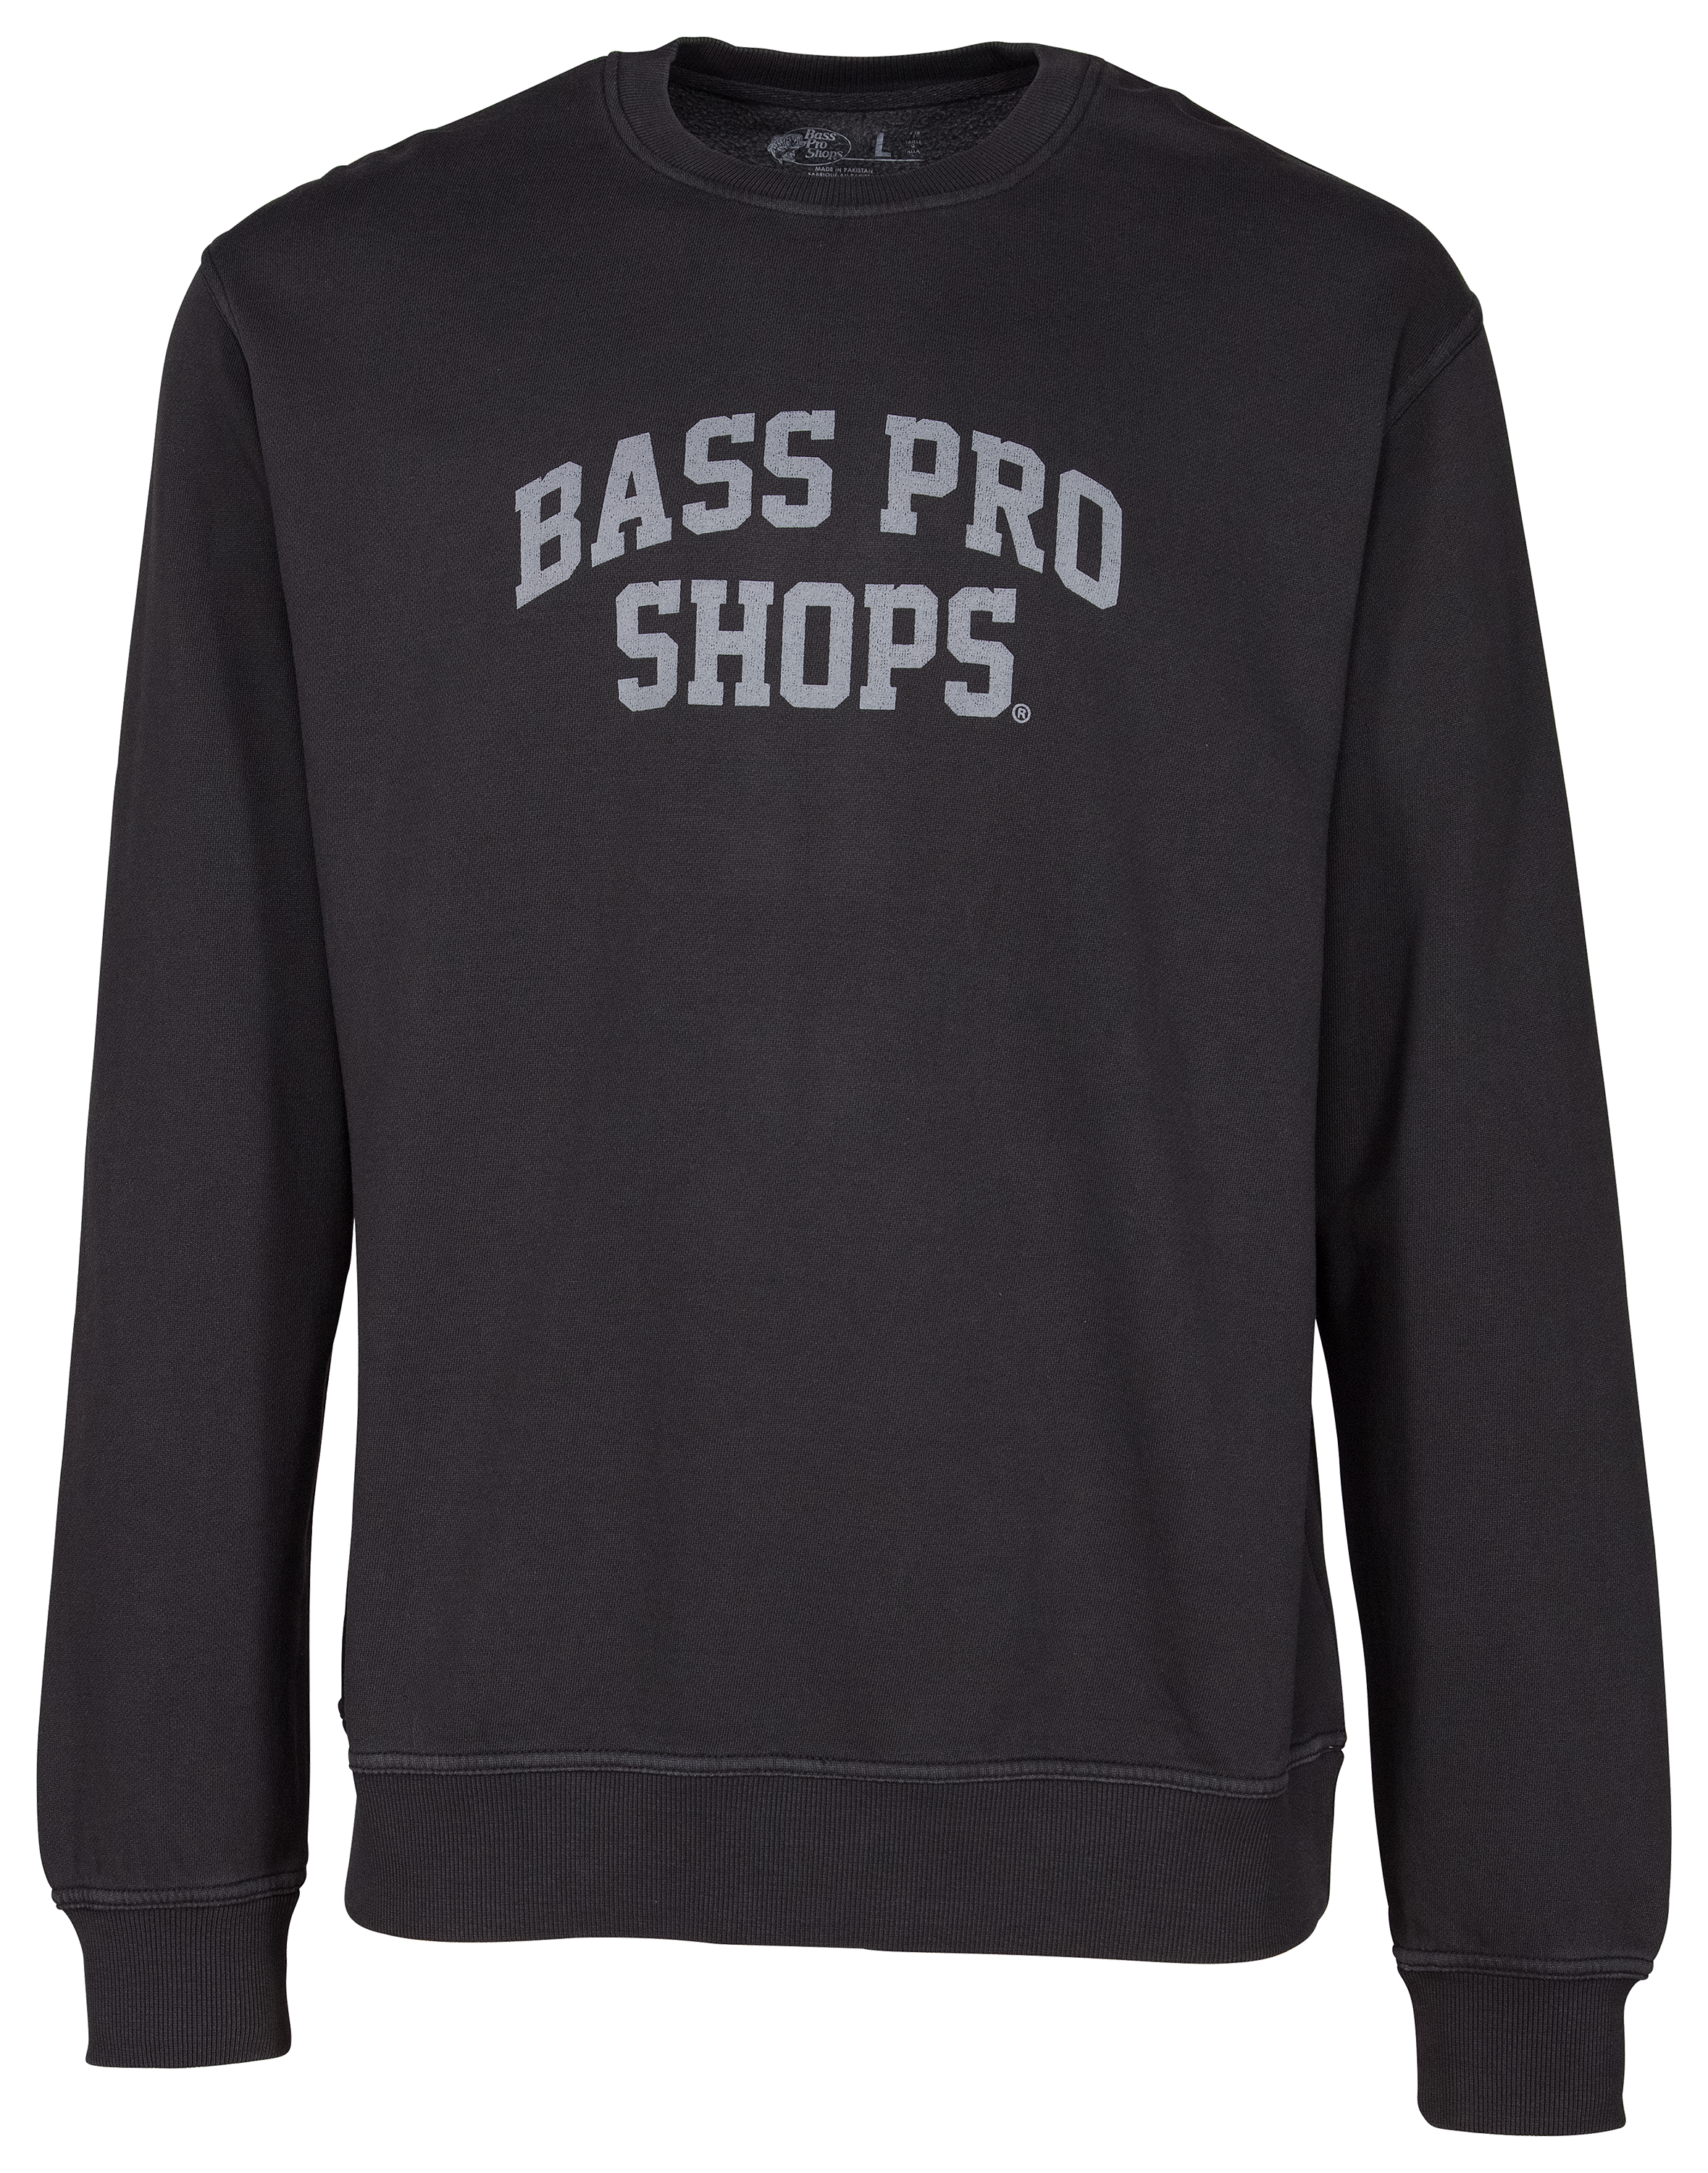 Bass Pro Shops, Tops, Bass Pro Shop Cropped Hoodie Black Crop Sweater  Sweatshirt